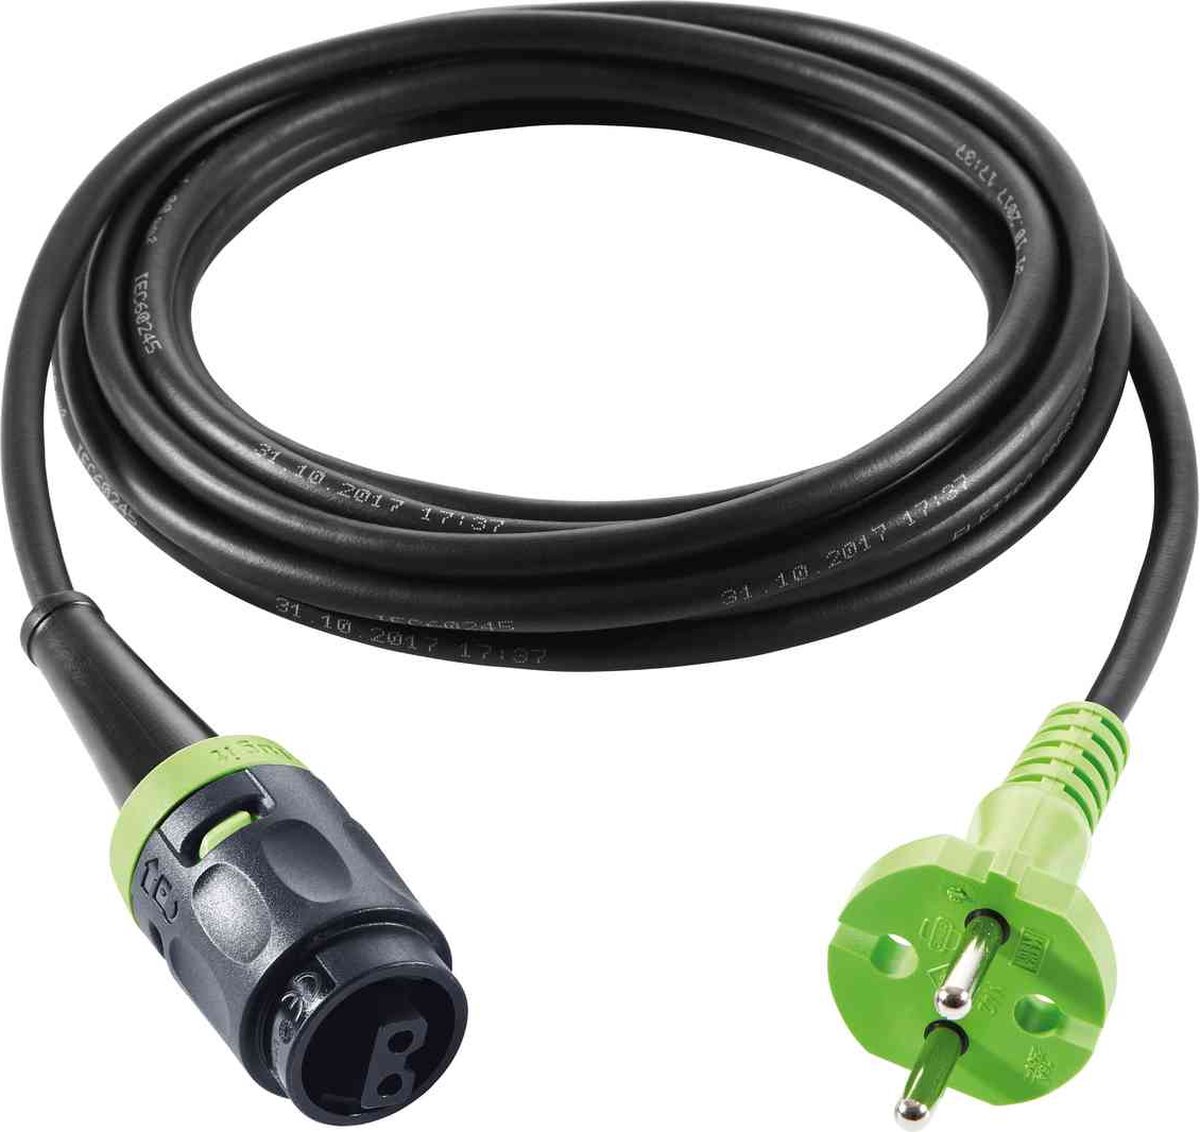 Festool 203920 H05 RN-F/7,5 Plug-it kabel voor festool machines - 7,5m - Festool